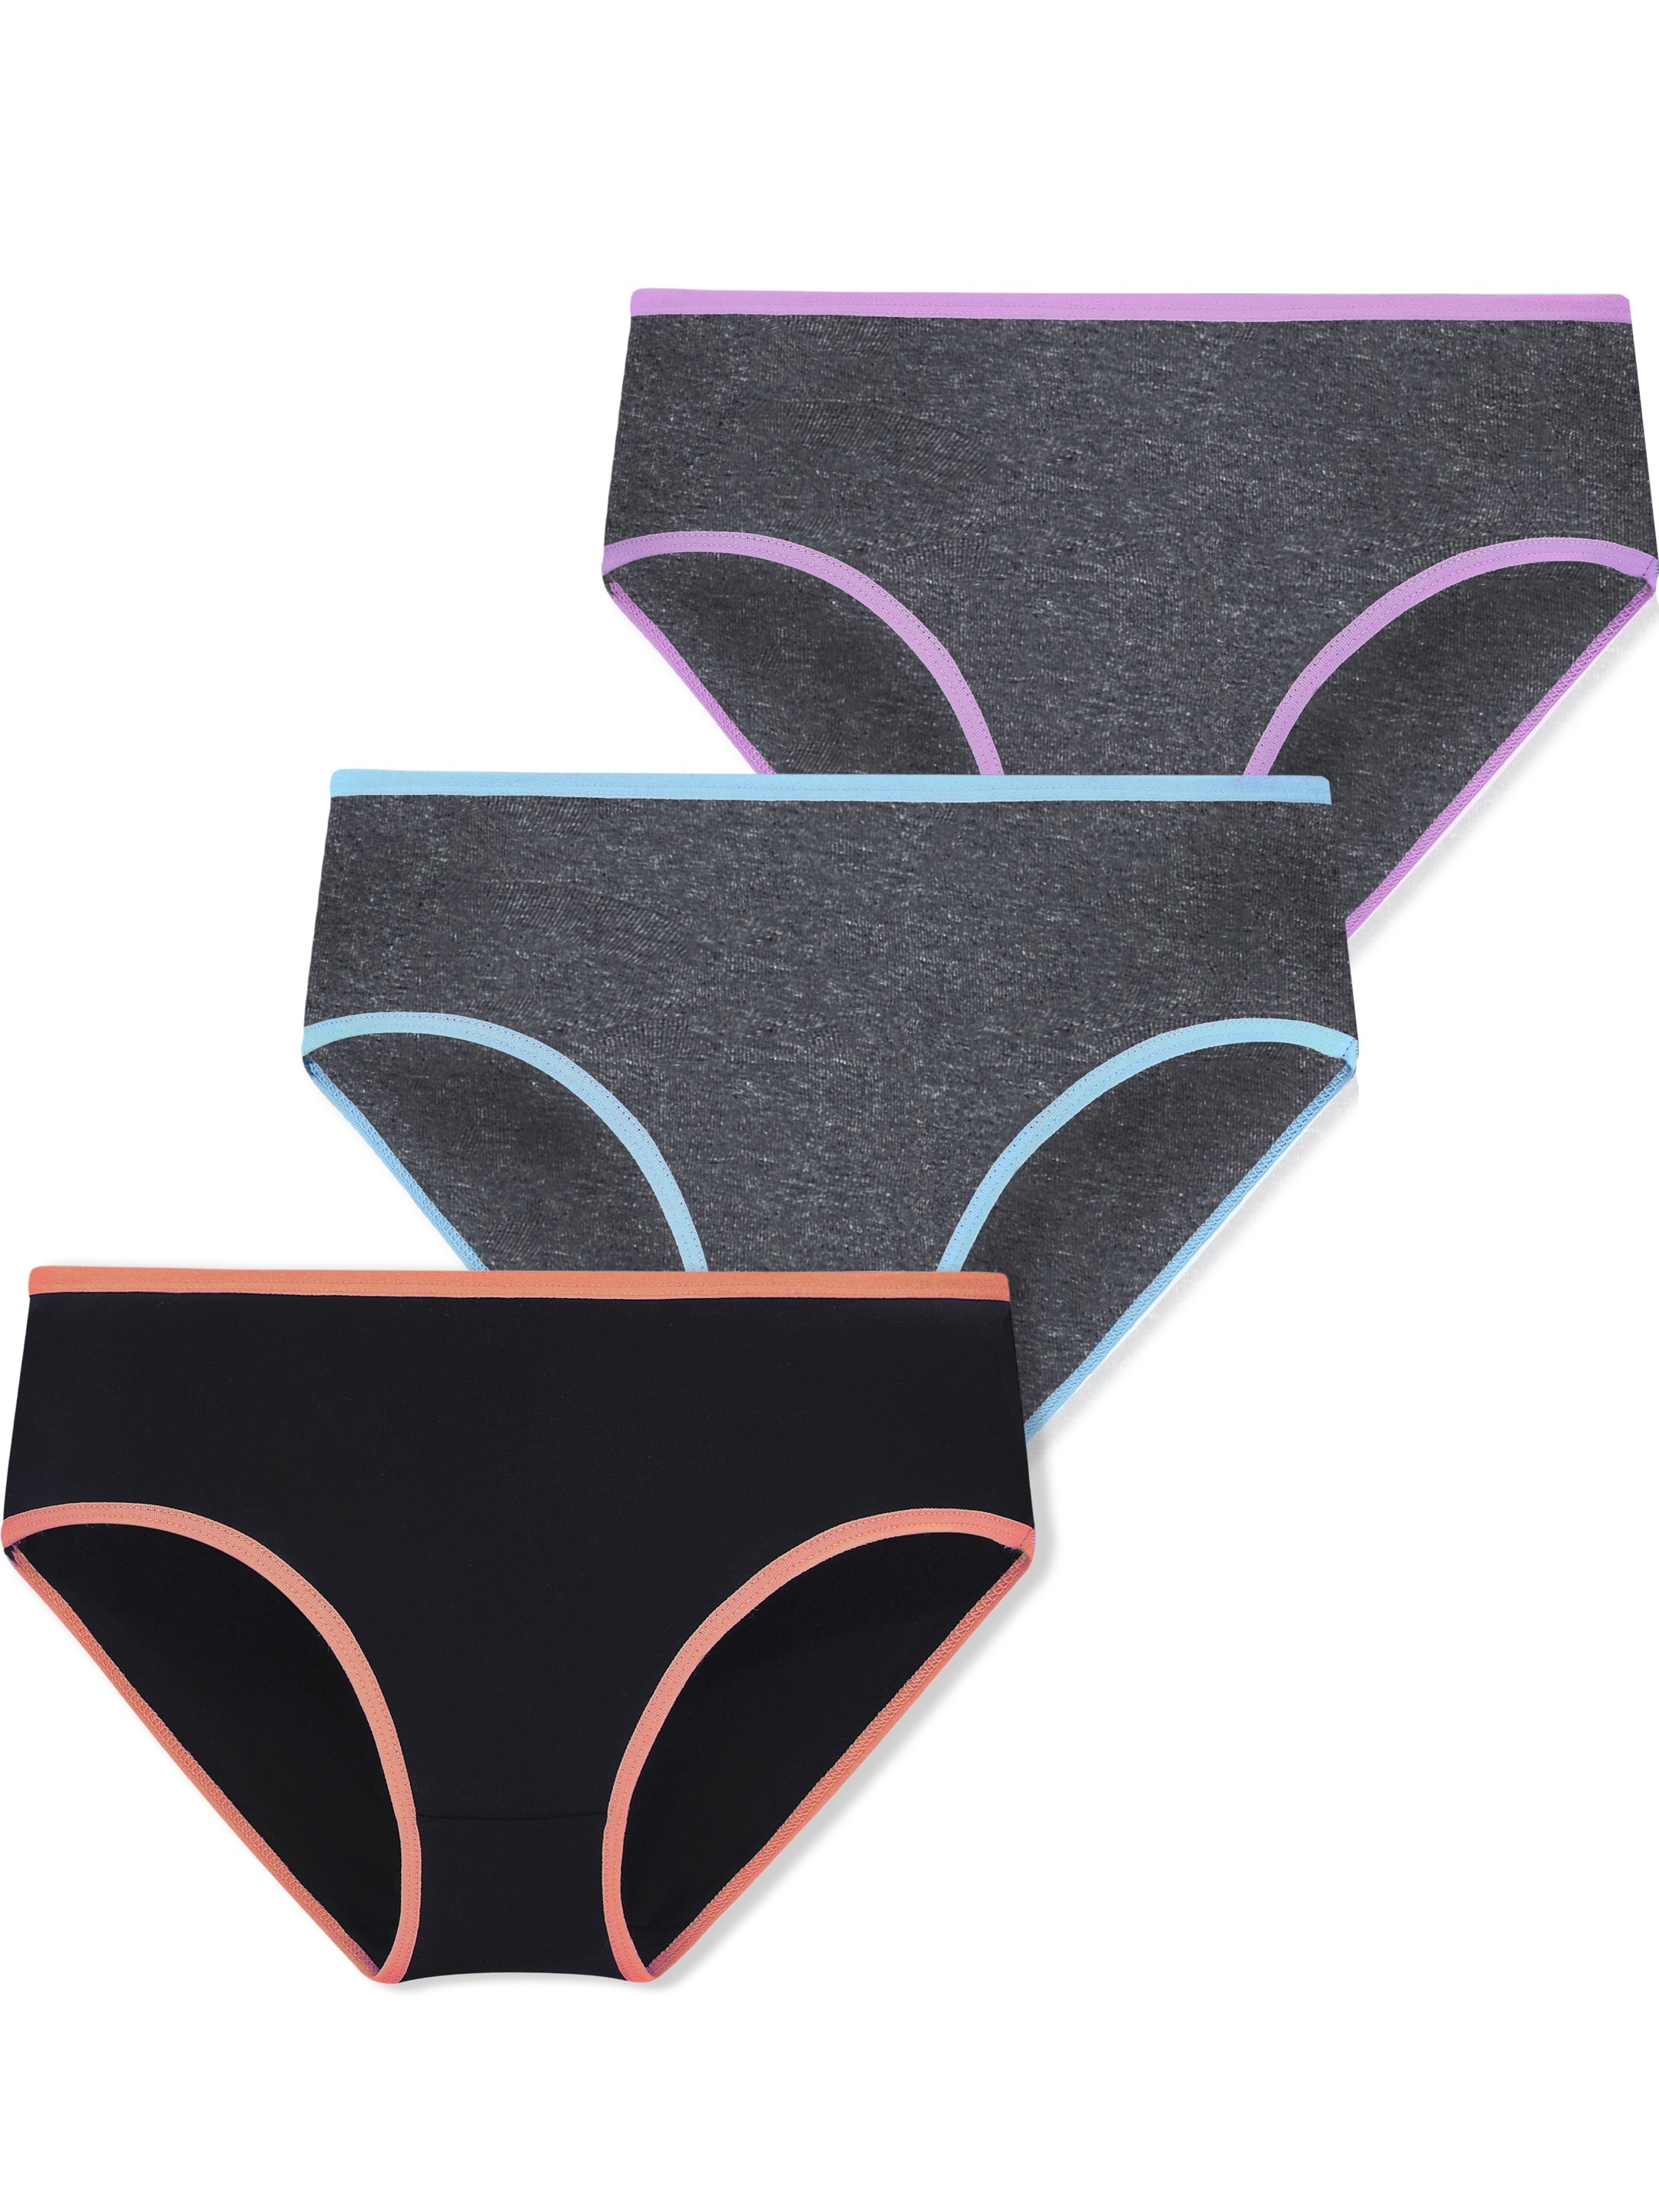 3pcs/set Underwear Women Cotton Seamless Panties For Female Mid